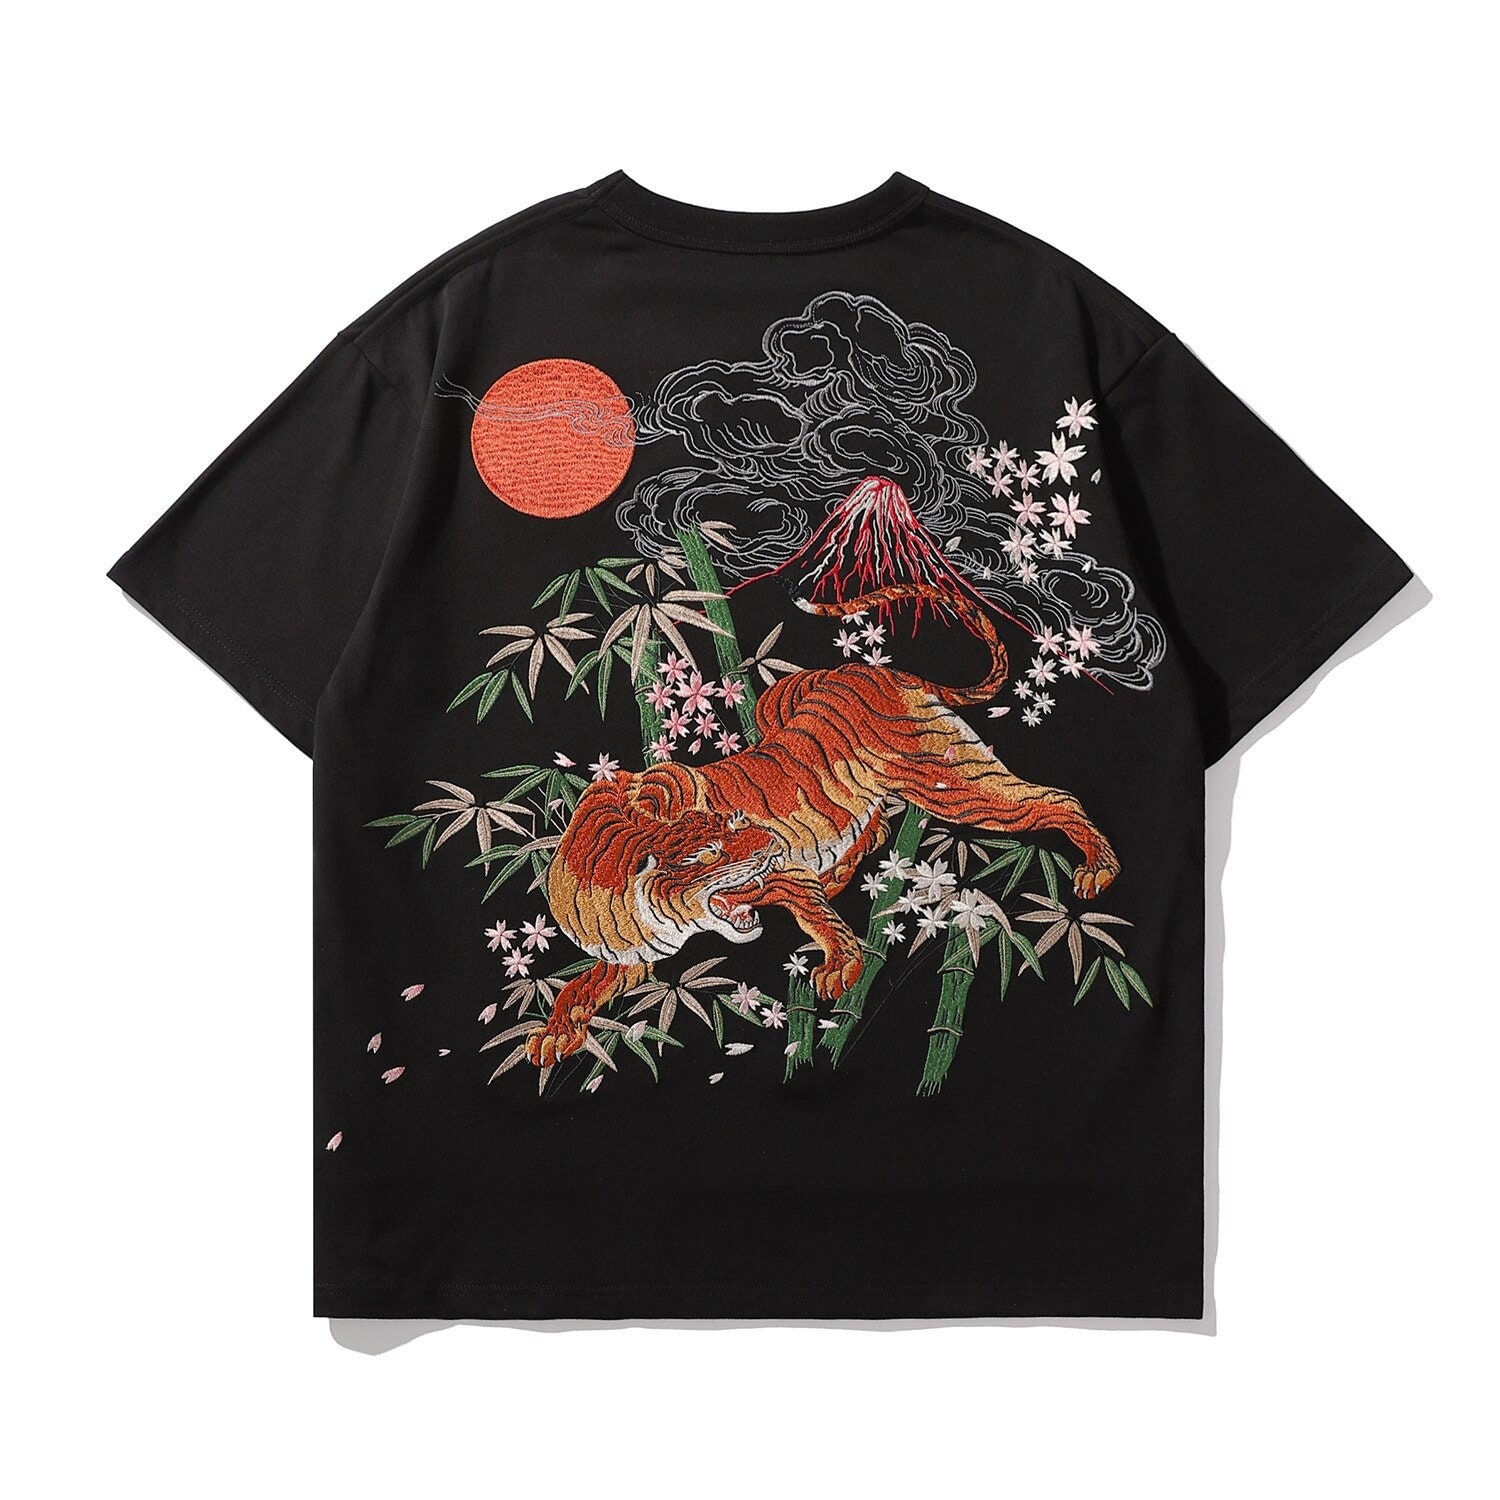 Japanese Streetwear Tiger In The Jungles Embroidery Tee Shirt Harajuku Urban Fashion Summer Black Short Sleeve T Shirt